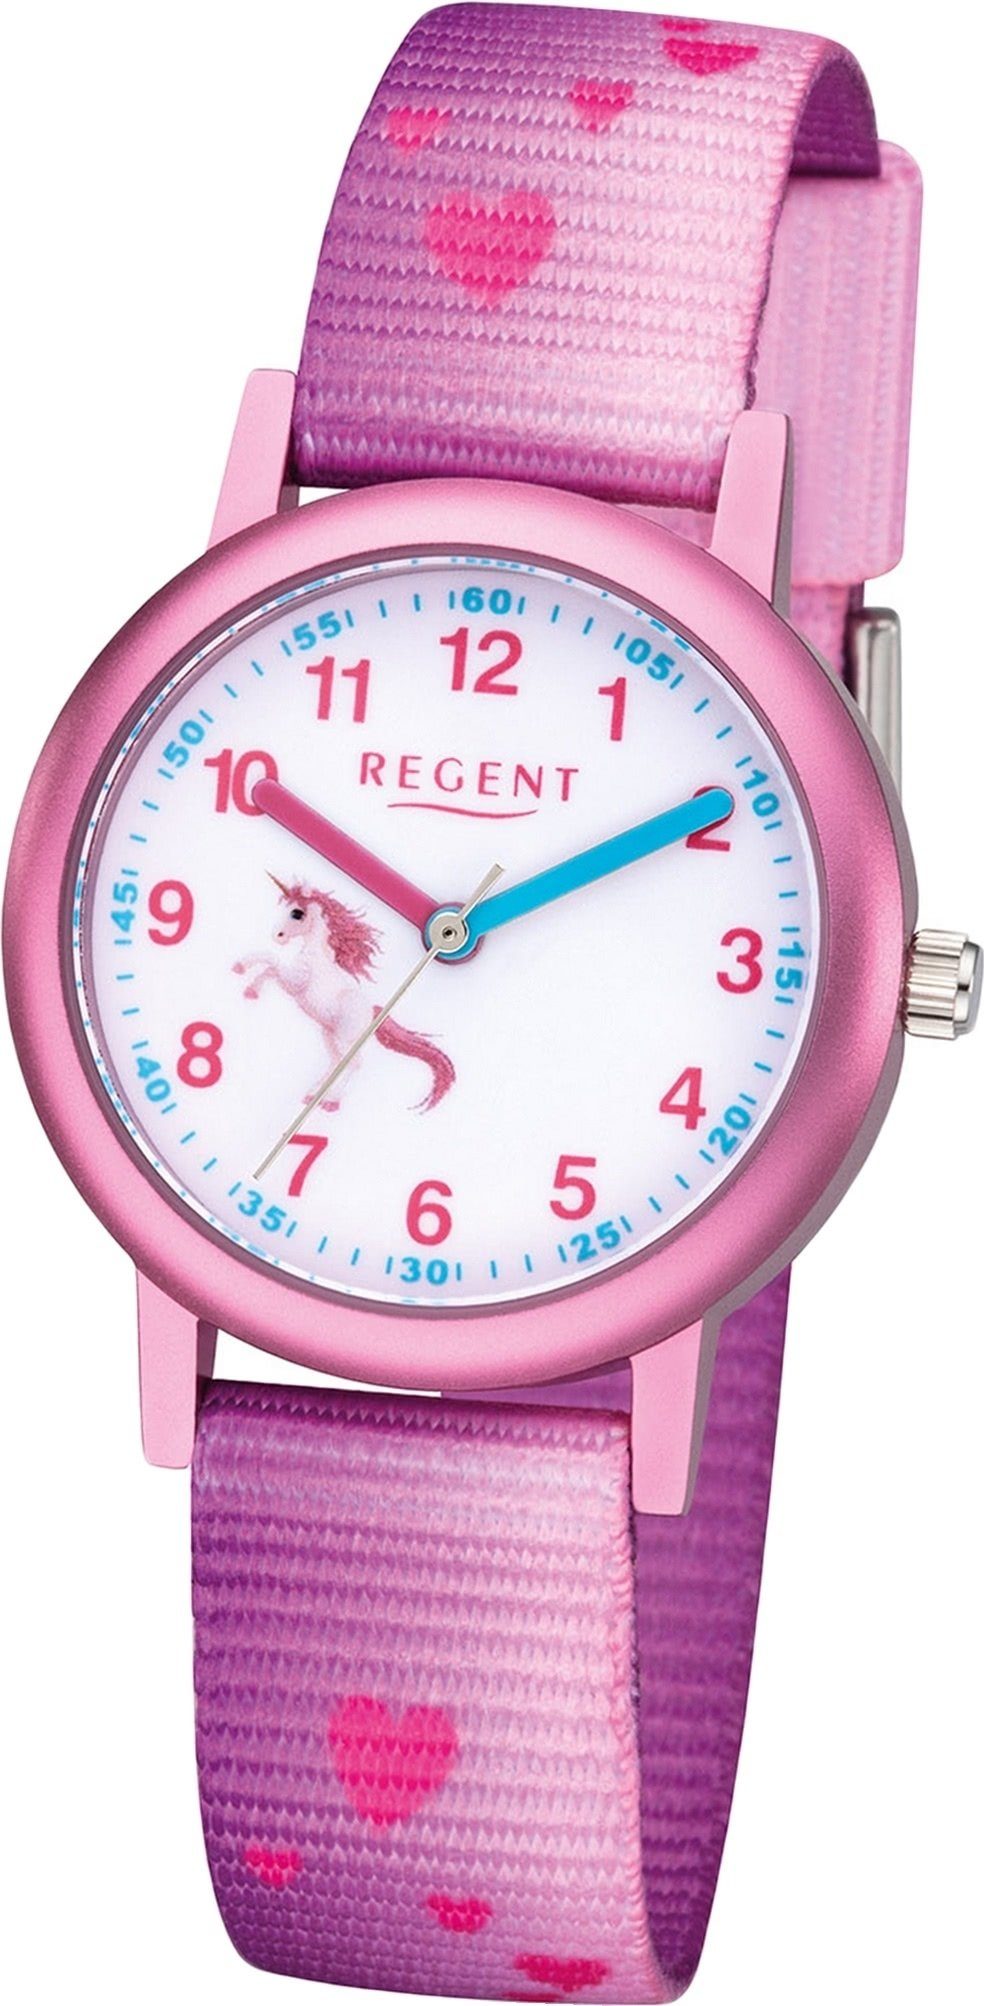 29mm) Quarzuhr Gehäuse, Textilarmband Uhr Regent (ca. rundes Kinder Regent F-1207 Kinderuhr rosa, Analog, klein Textil